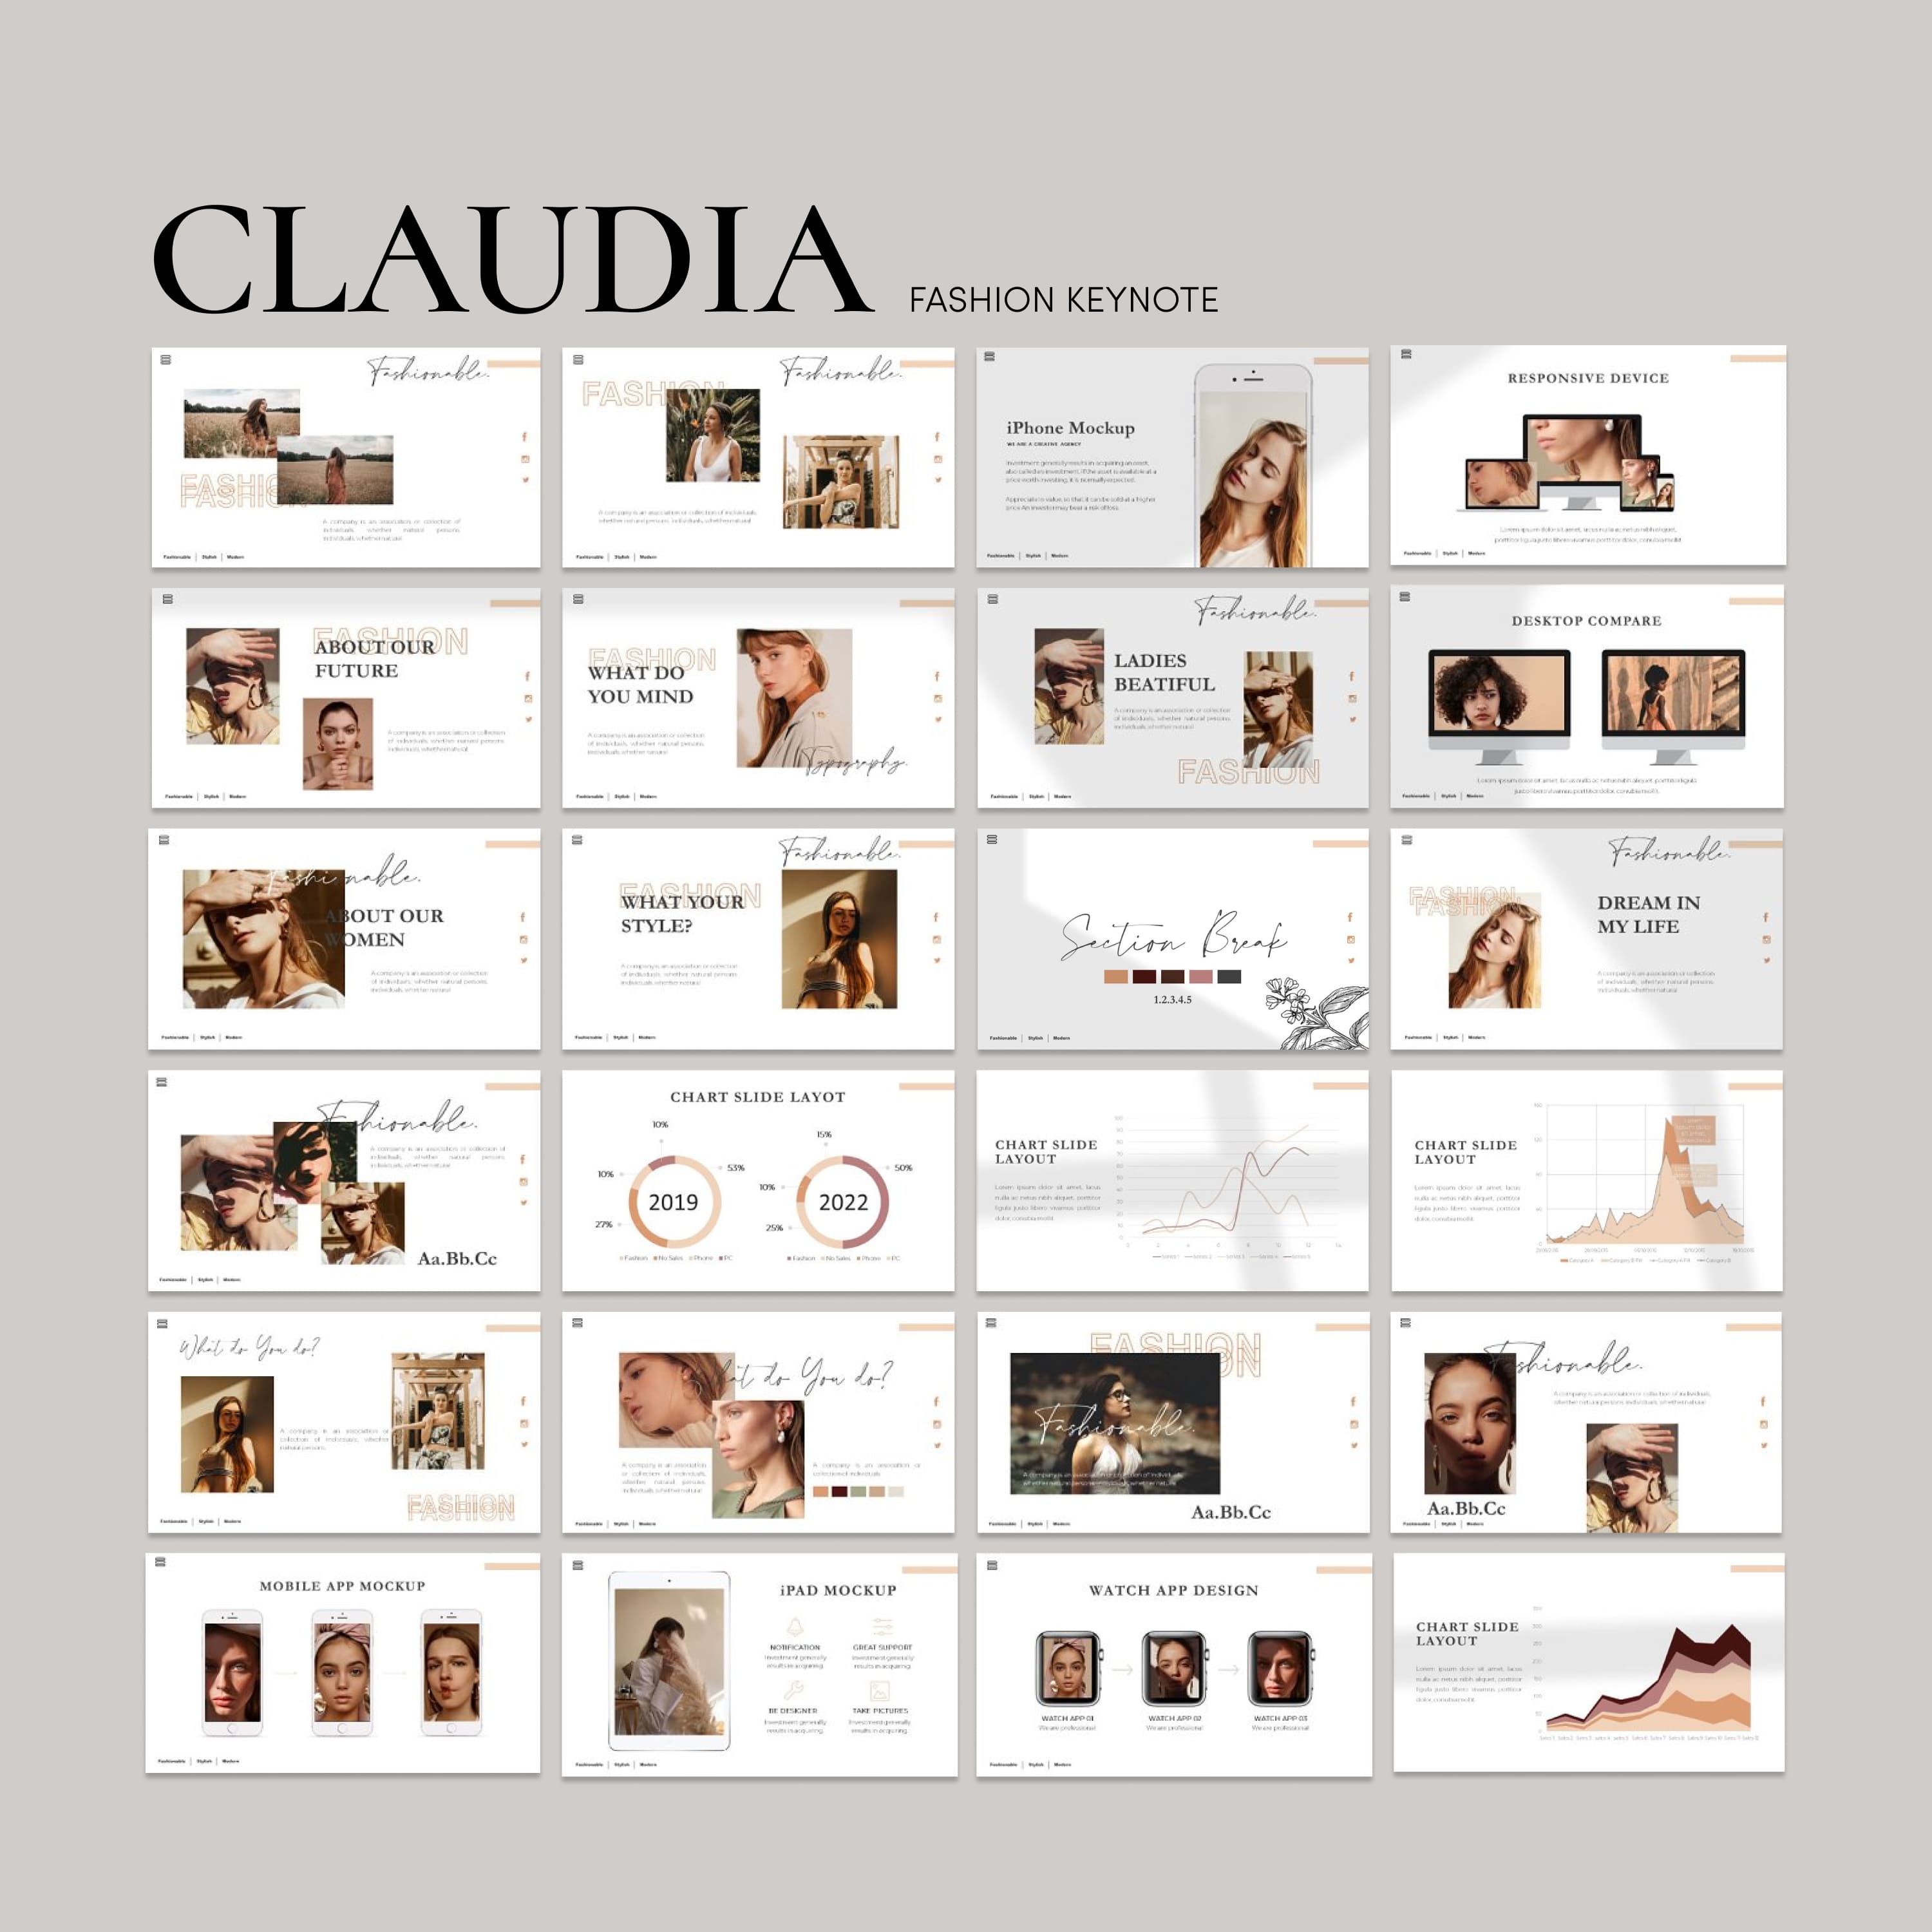 Claudia fashion keynote - main image preview.